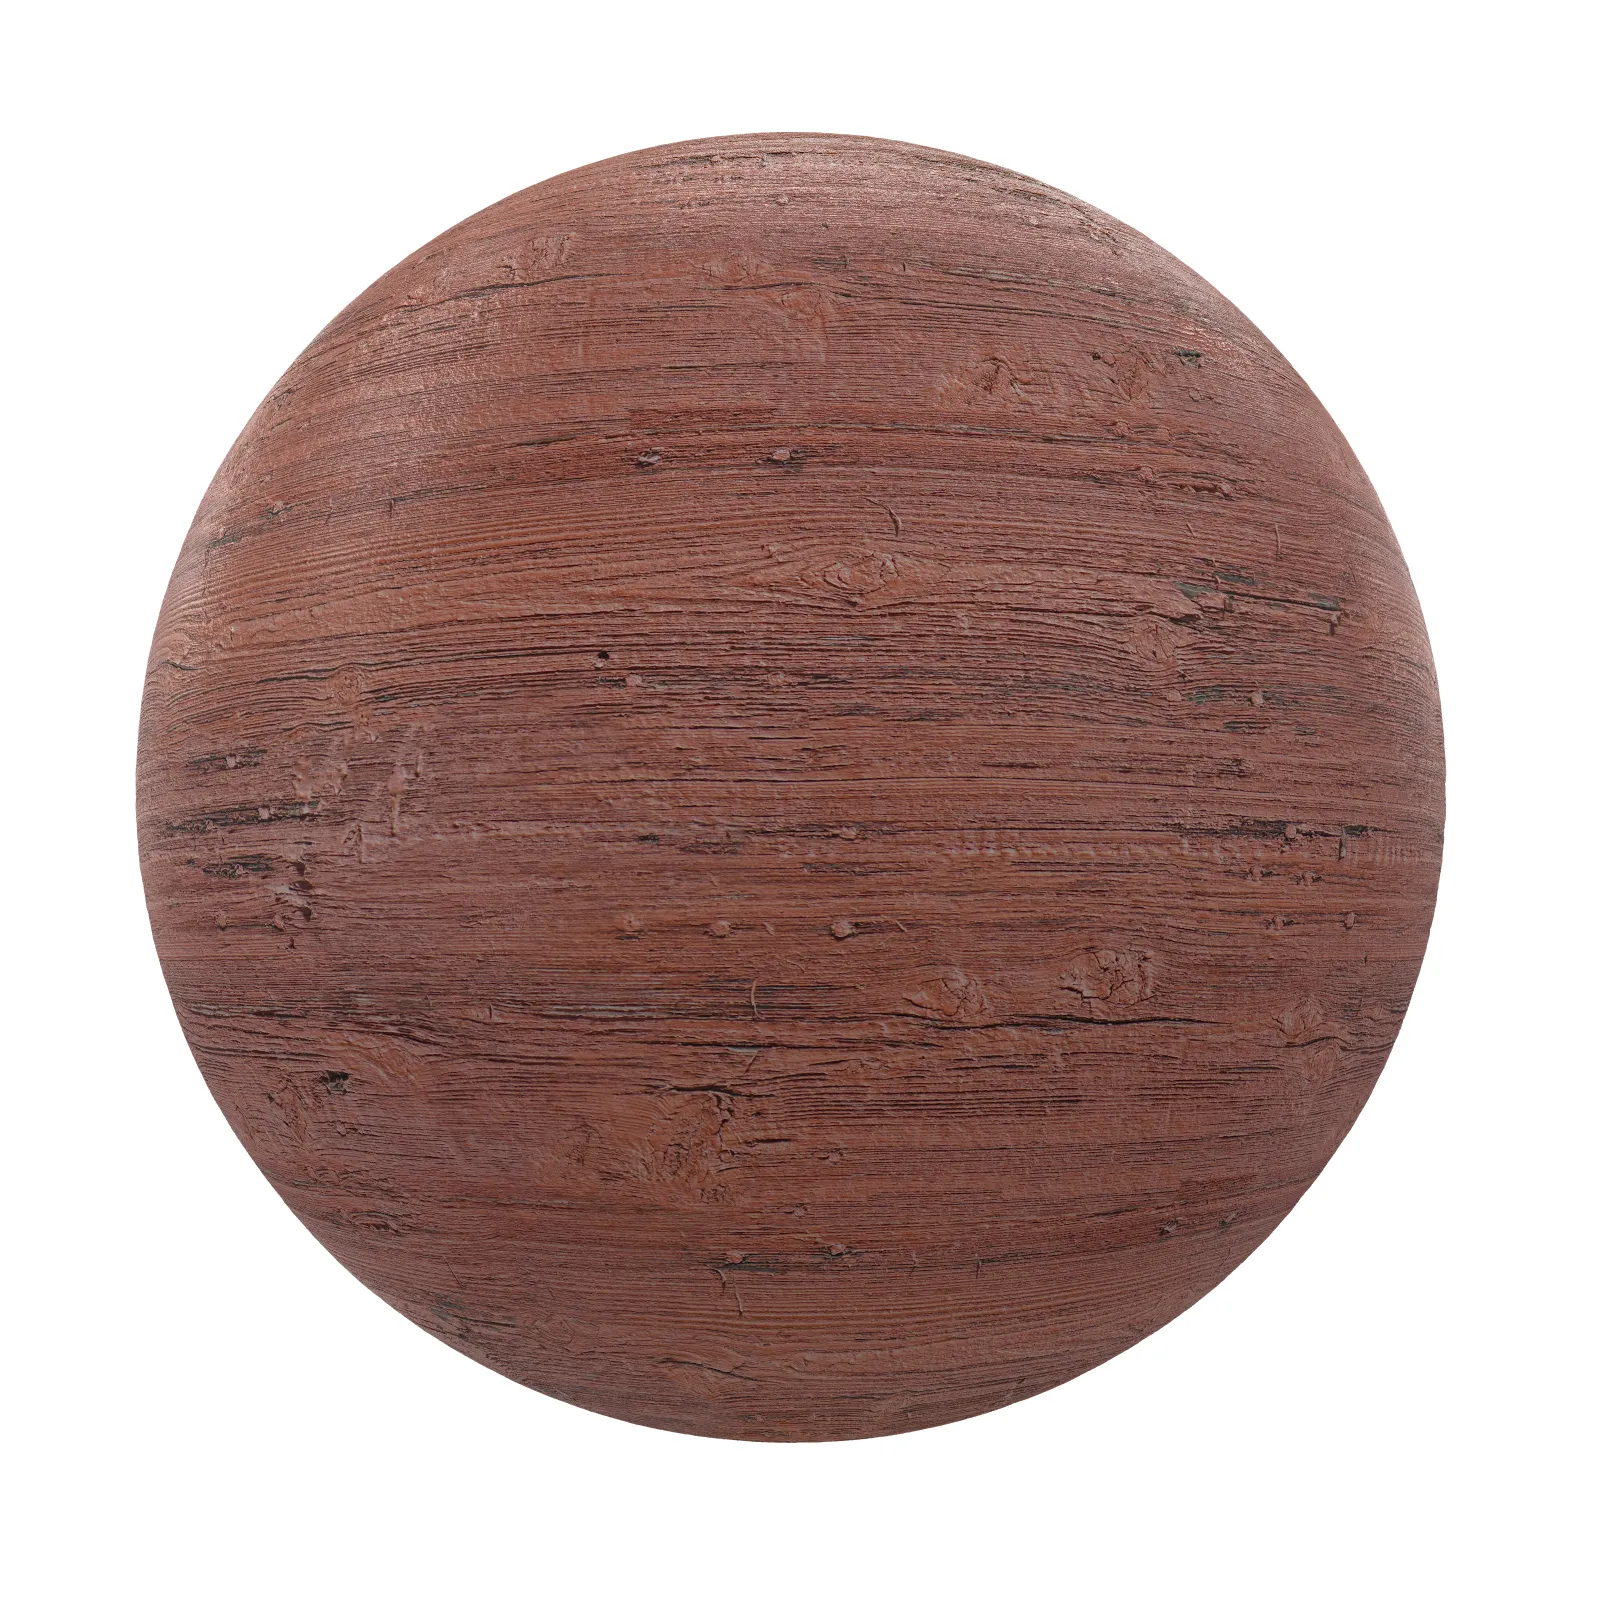 3ds Max Files – Texture – 8 – Wood Texture – 102 – Wood Texture by Minh Nguyen